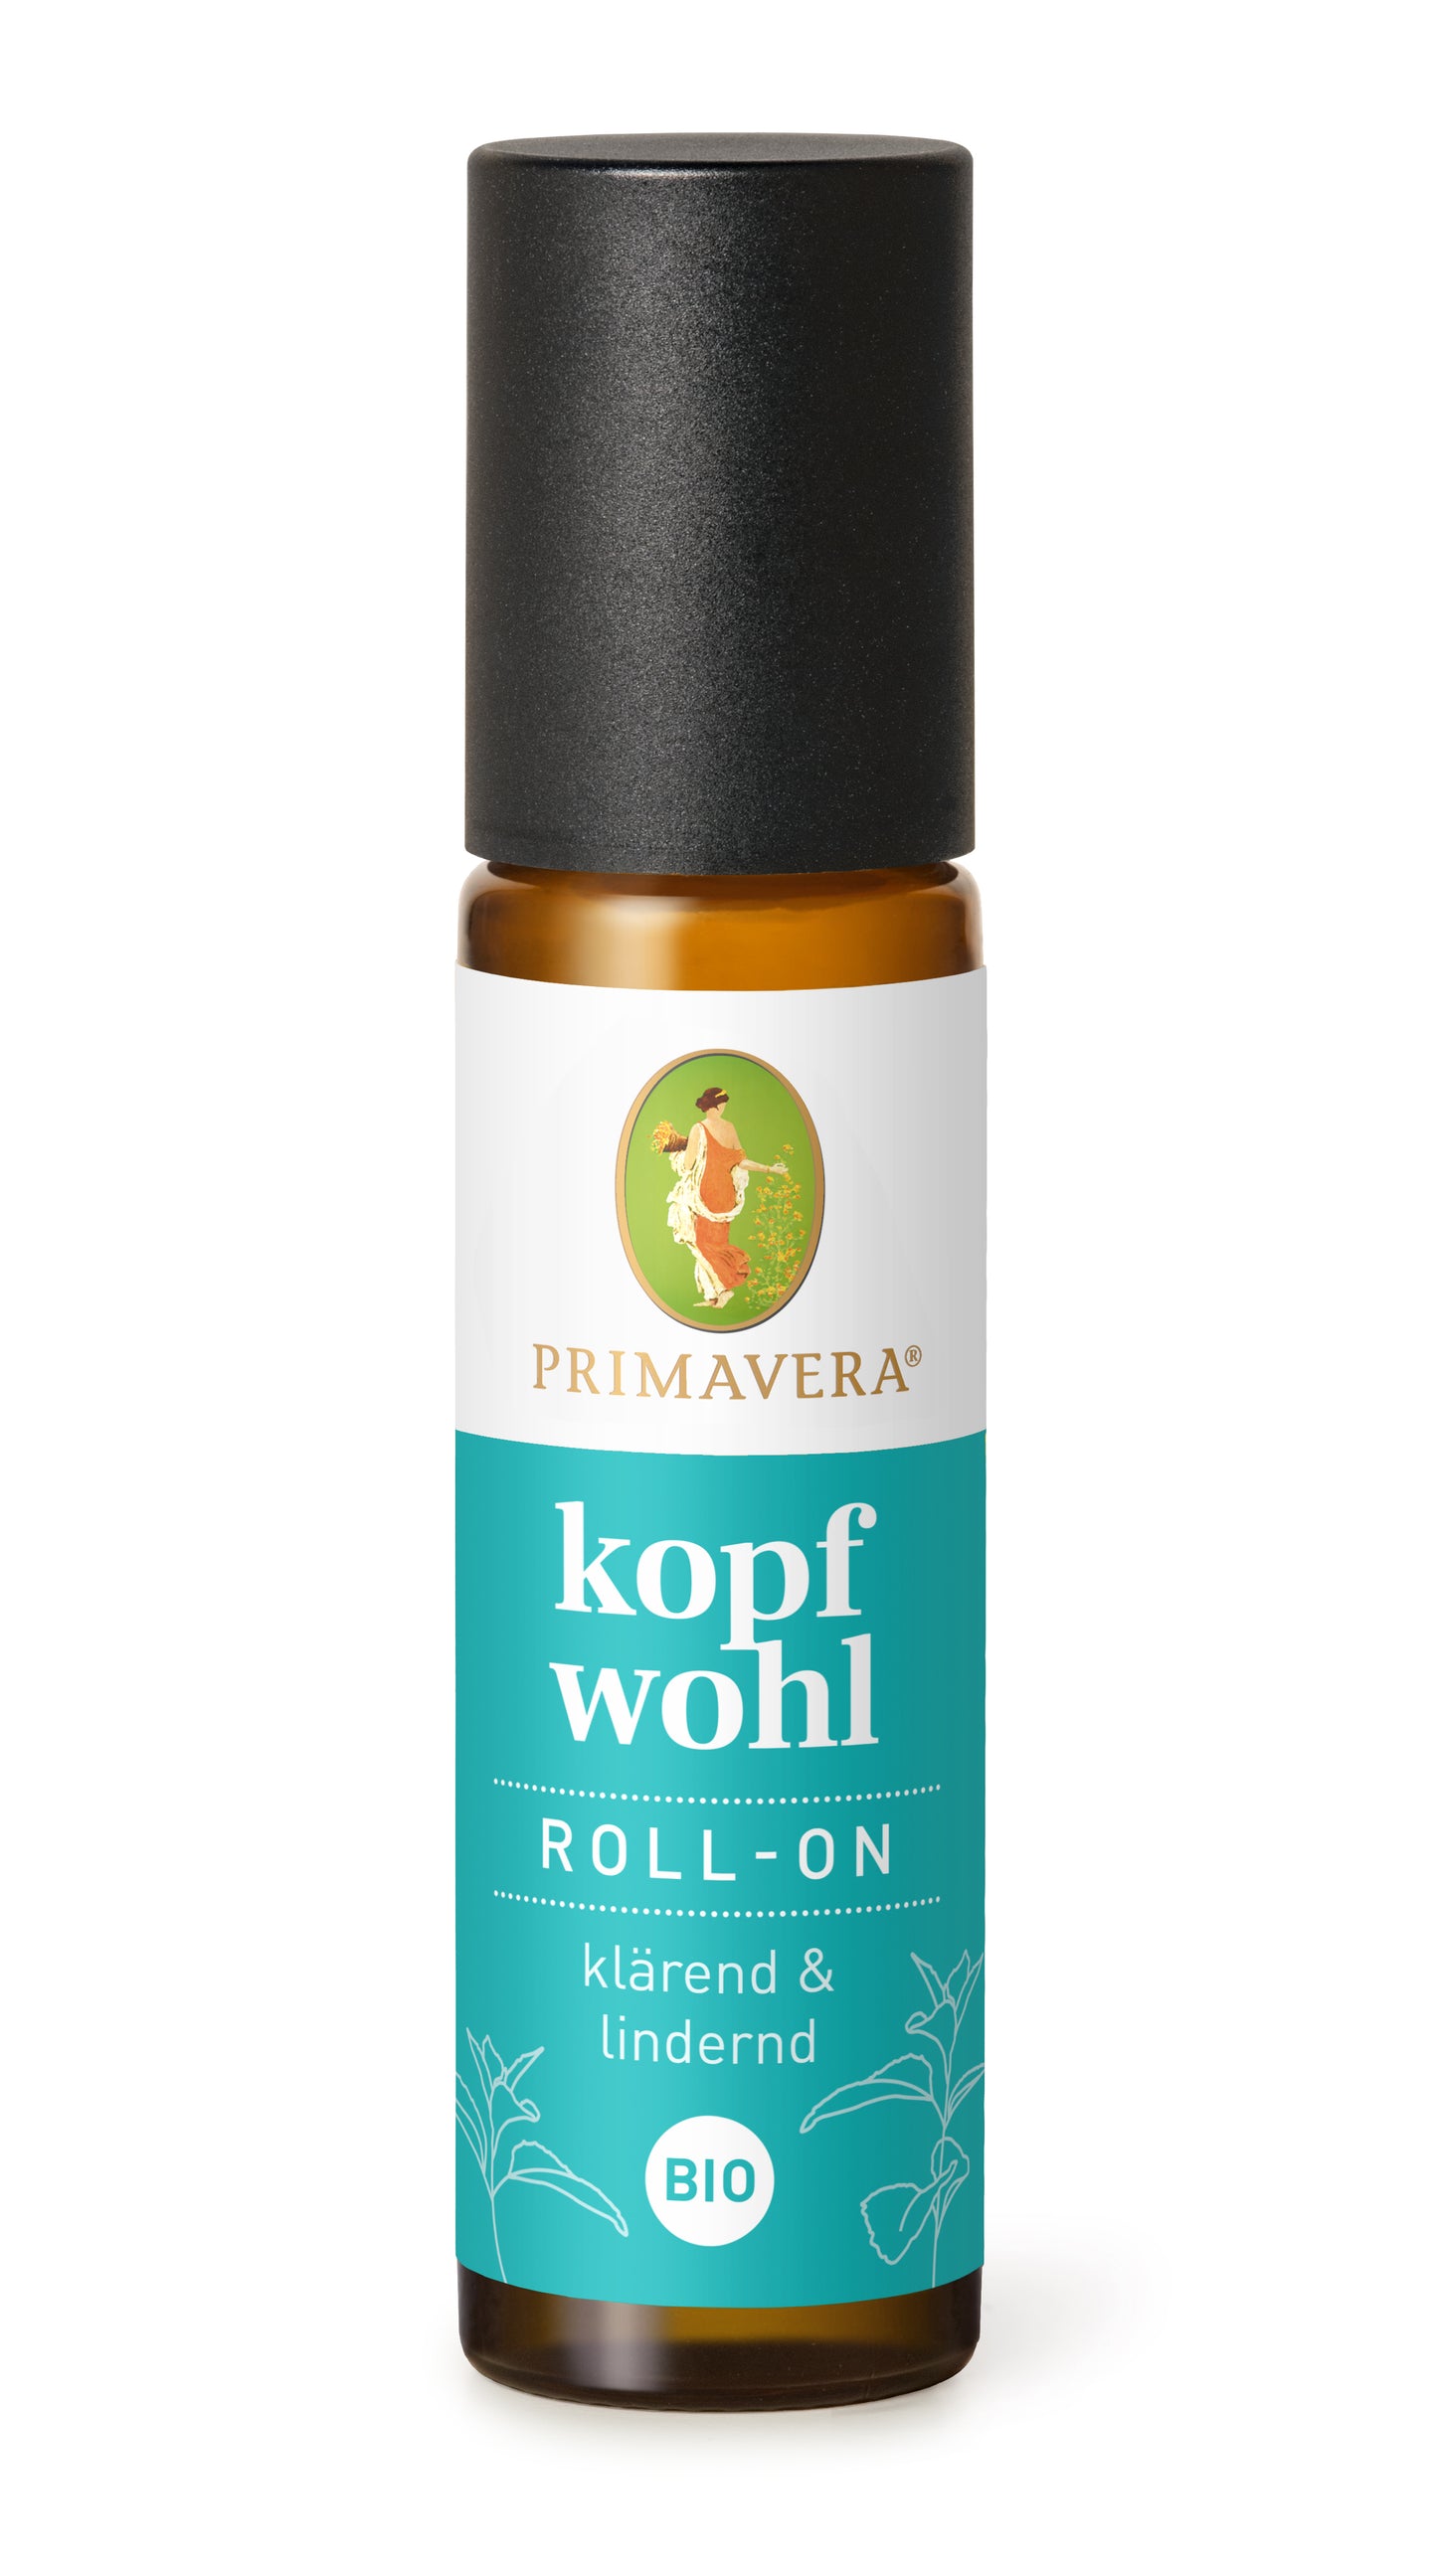 Primavera - Kopfwohl Roll-On bio 10 ml